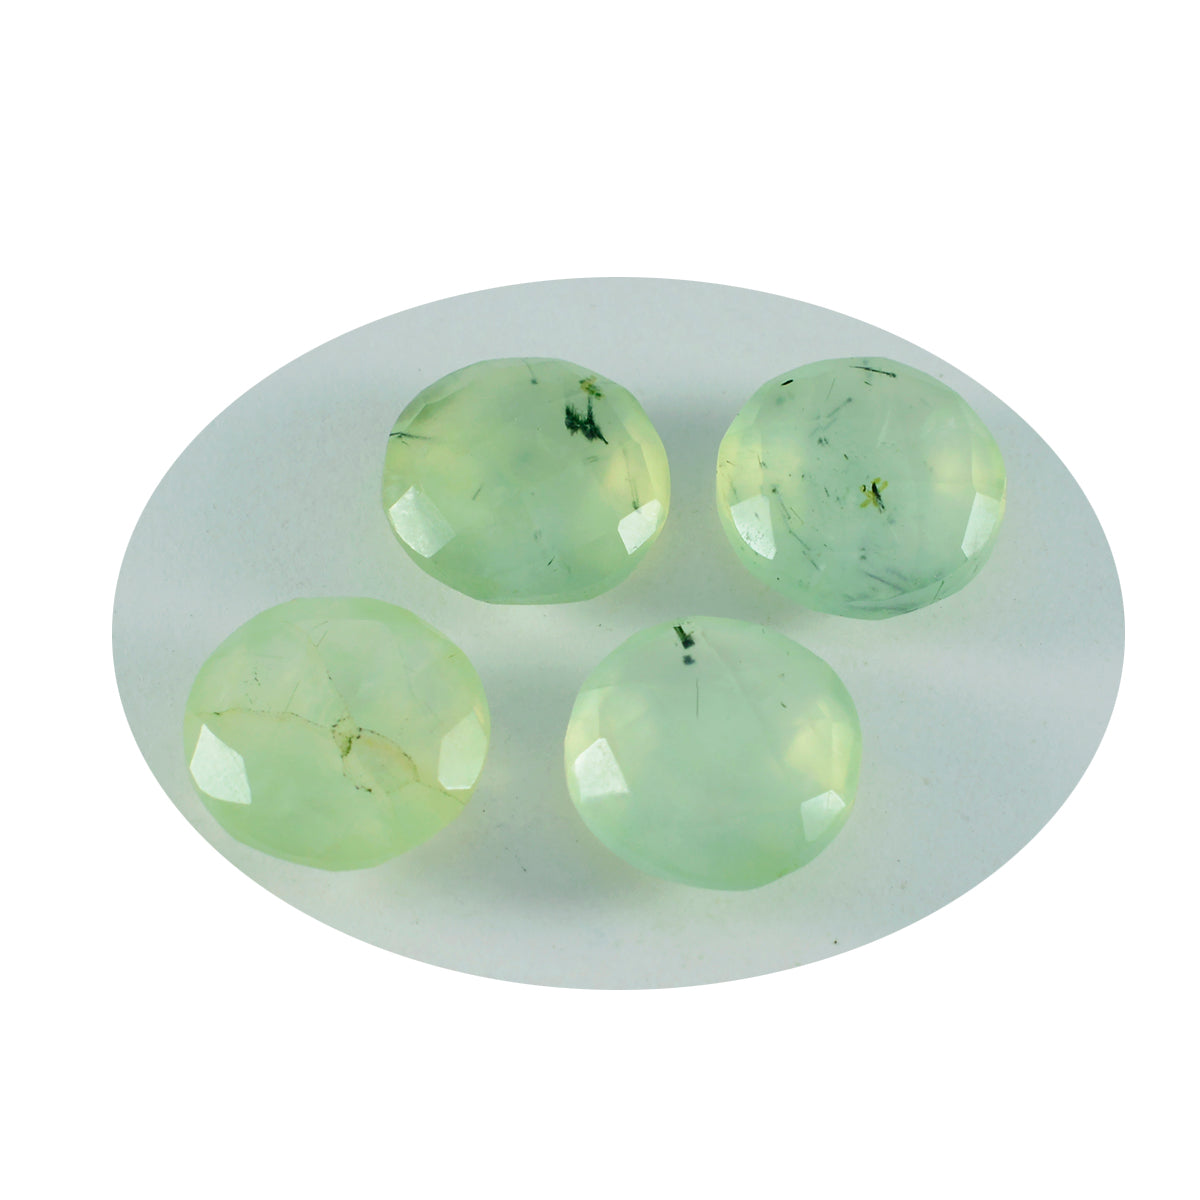 Riyogems 1PC Green Prehnite Faceted 15x15 mm Round Shape beautiful Quality Loose Gemstone